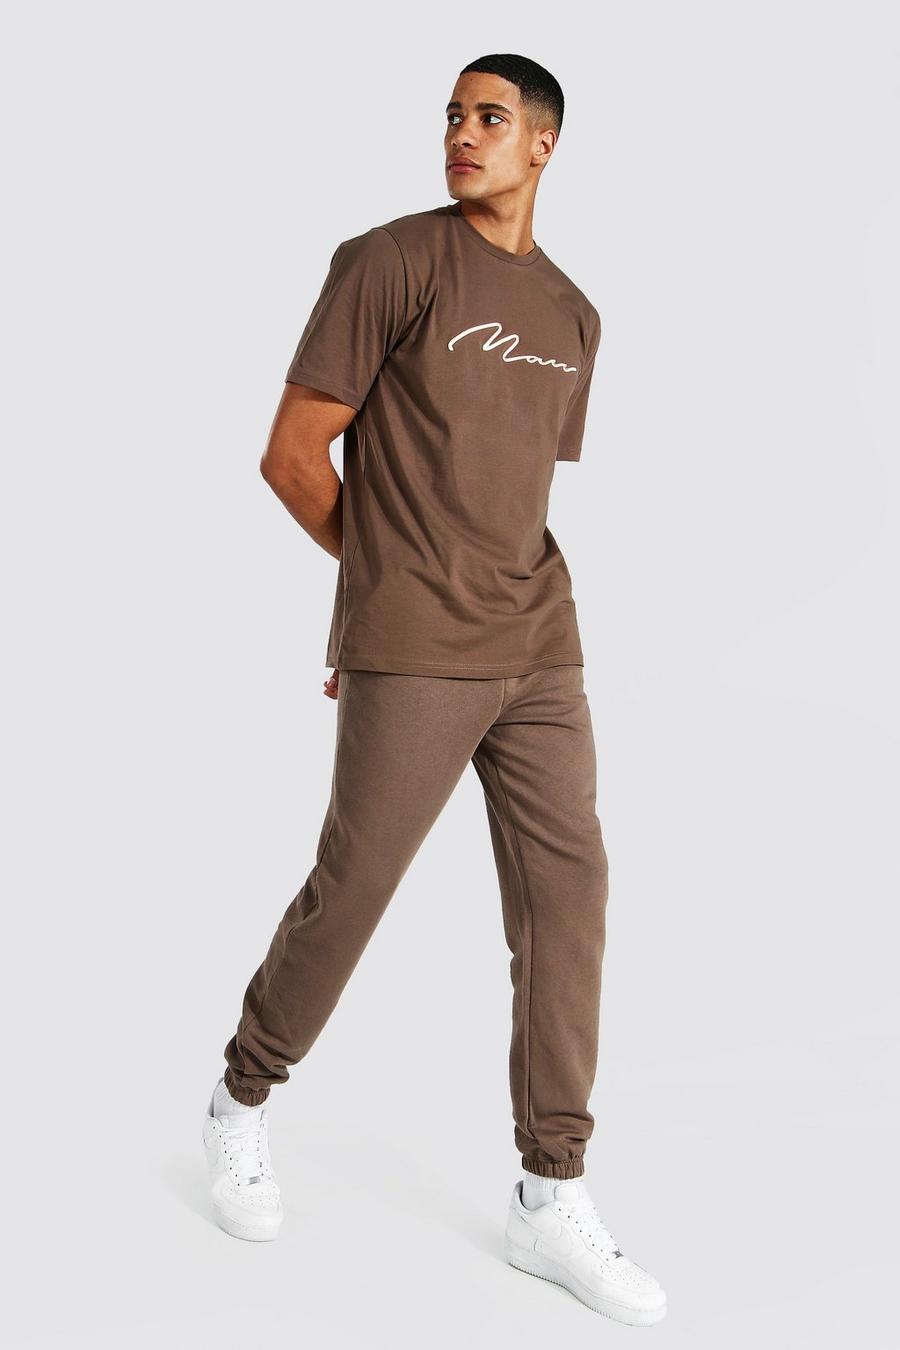 Tall - ensemble avec t-shirt à empiècement - MAN, Chocolate brown image number 1